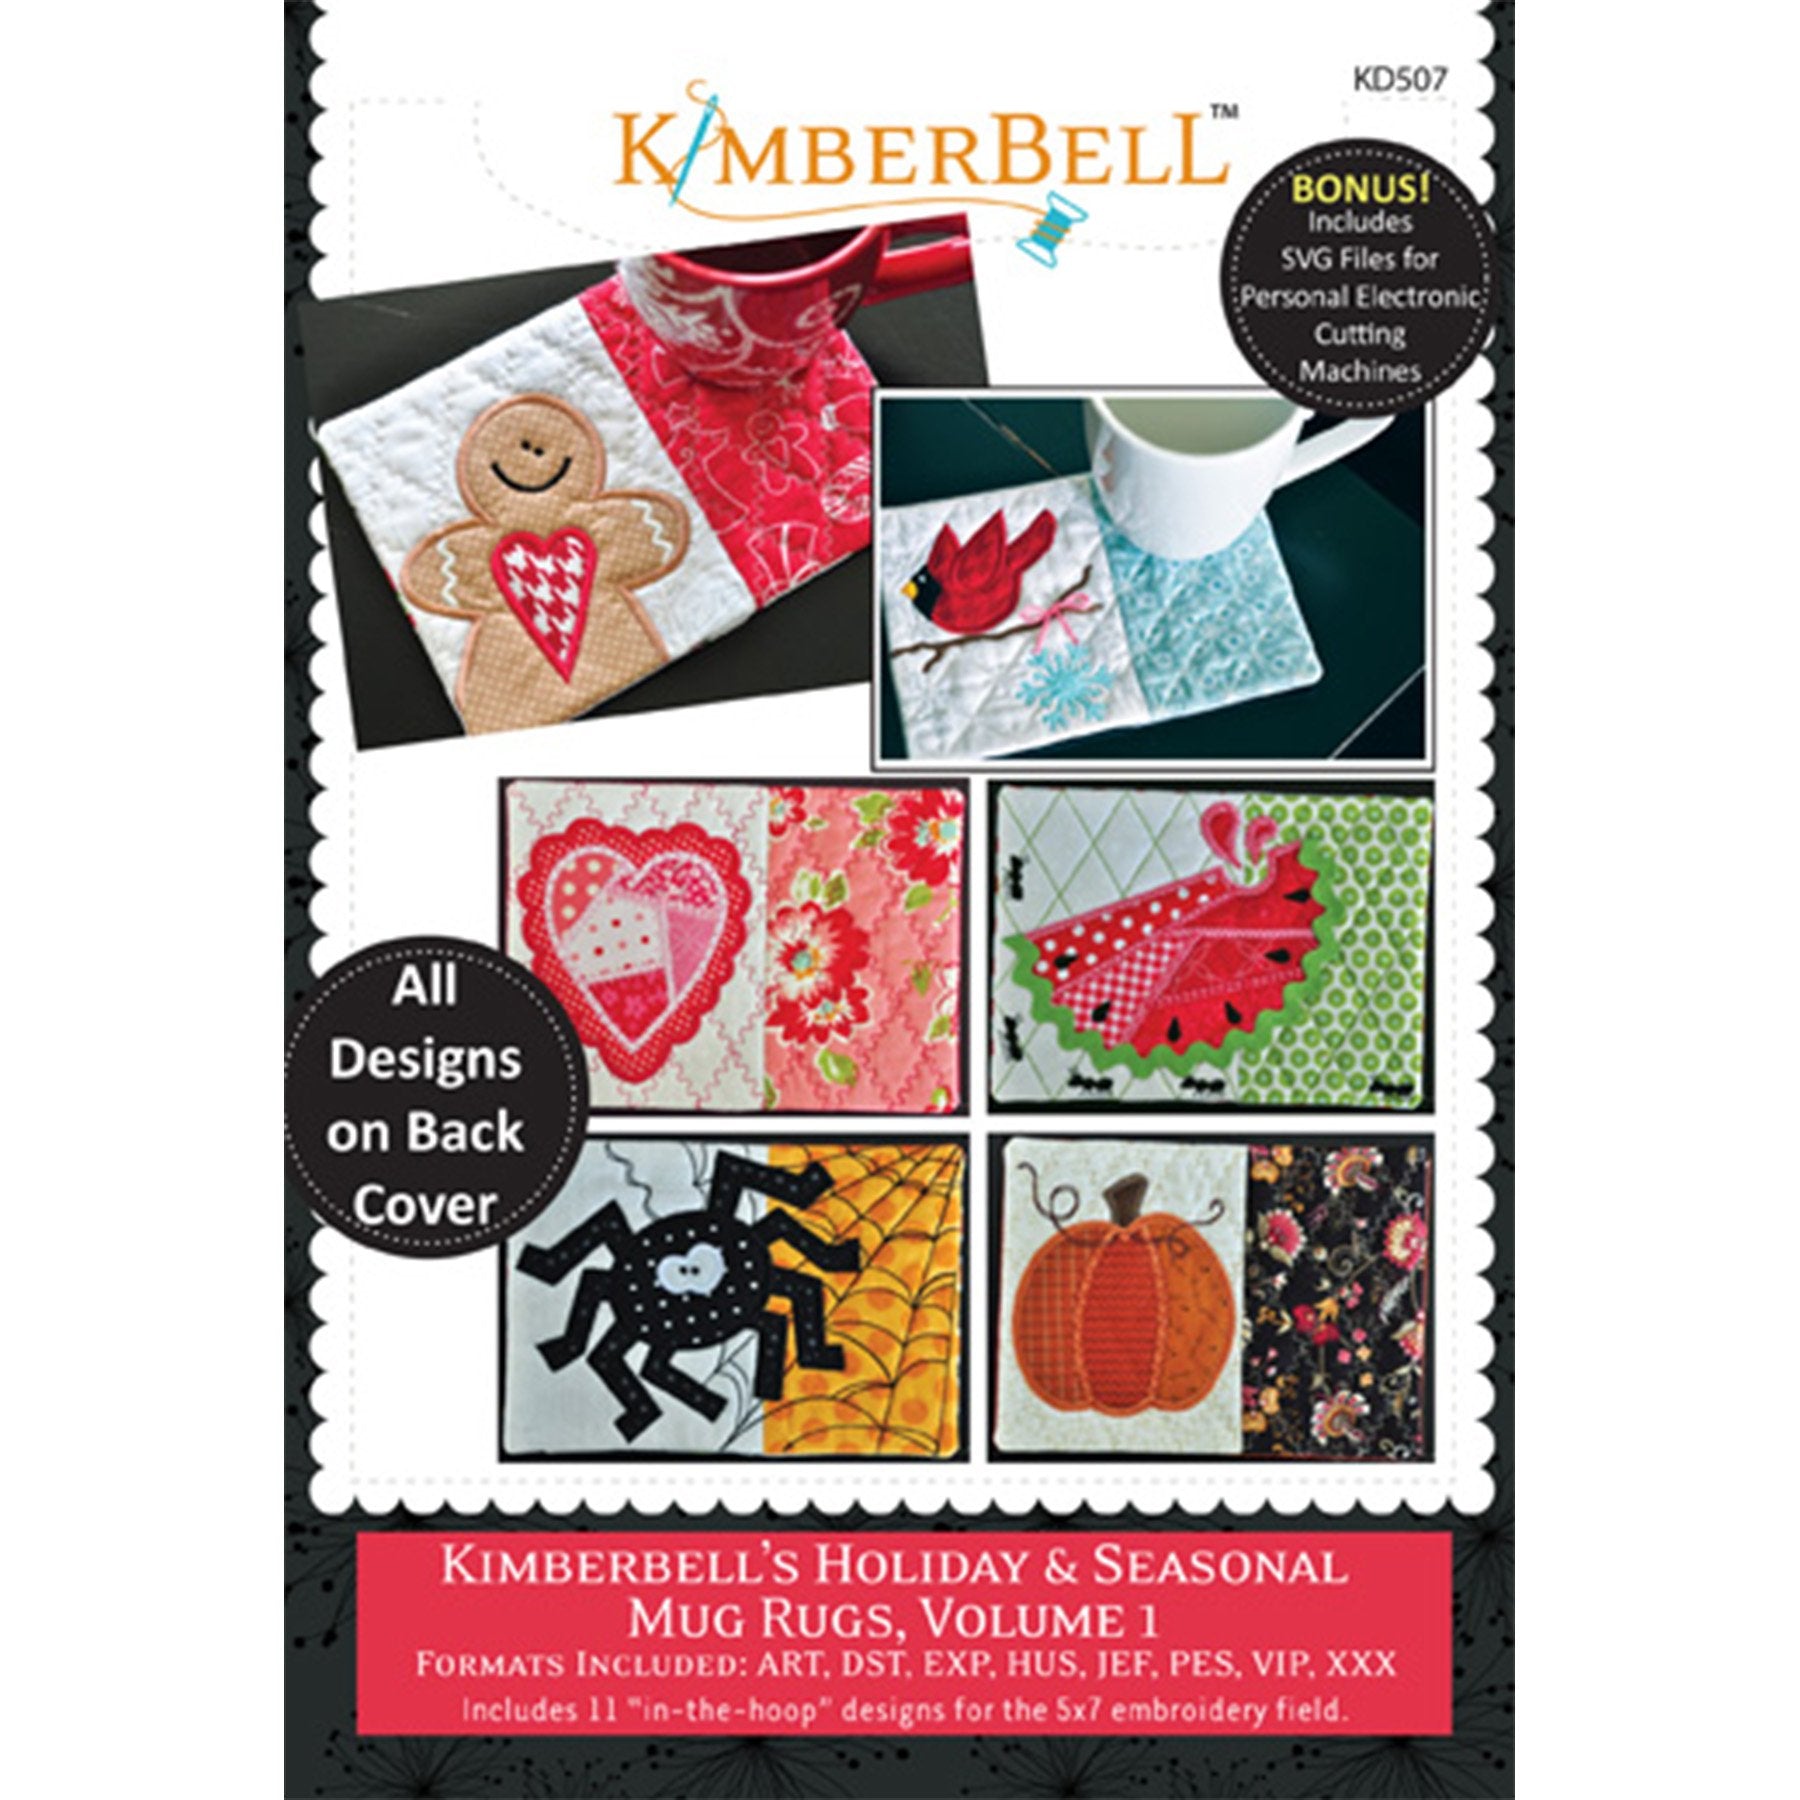 Kimberbell Dealer Exclusives Volume 1